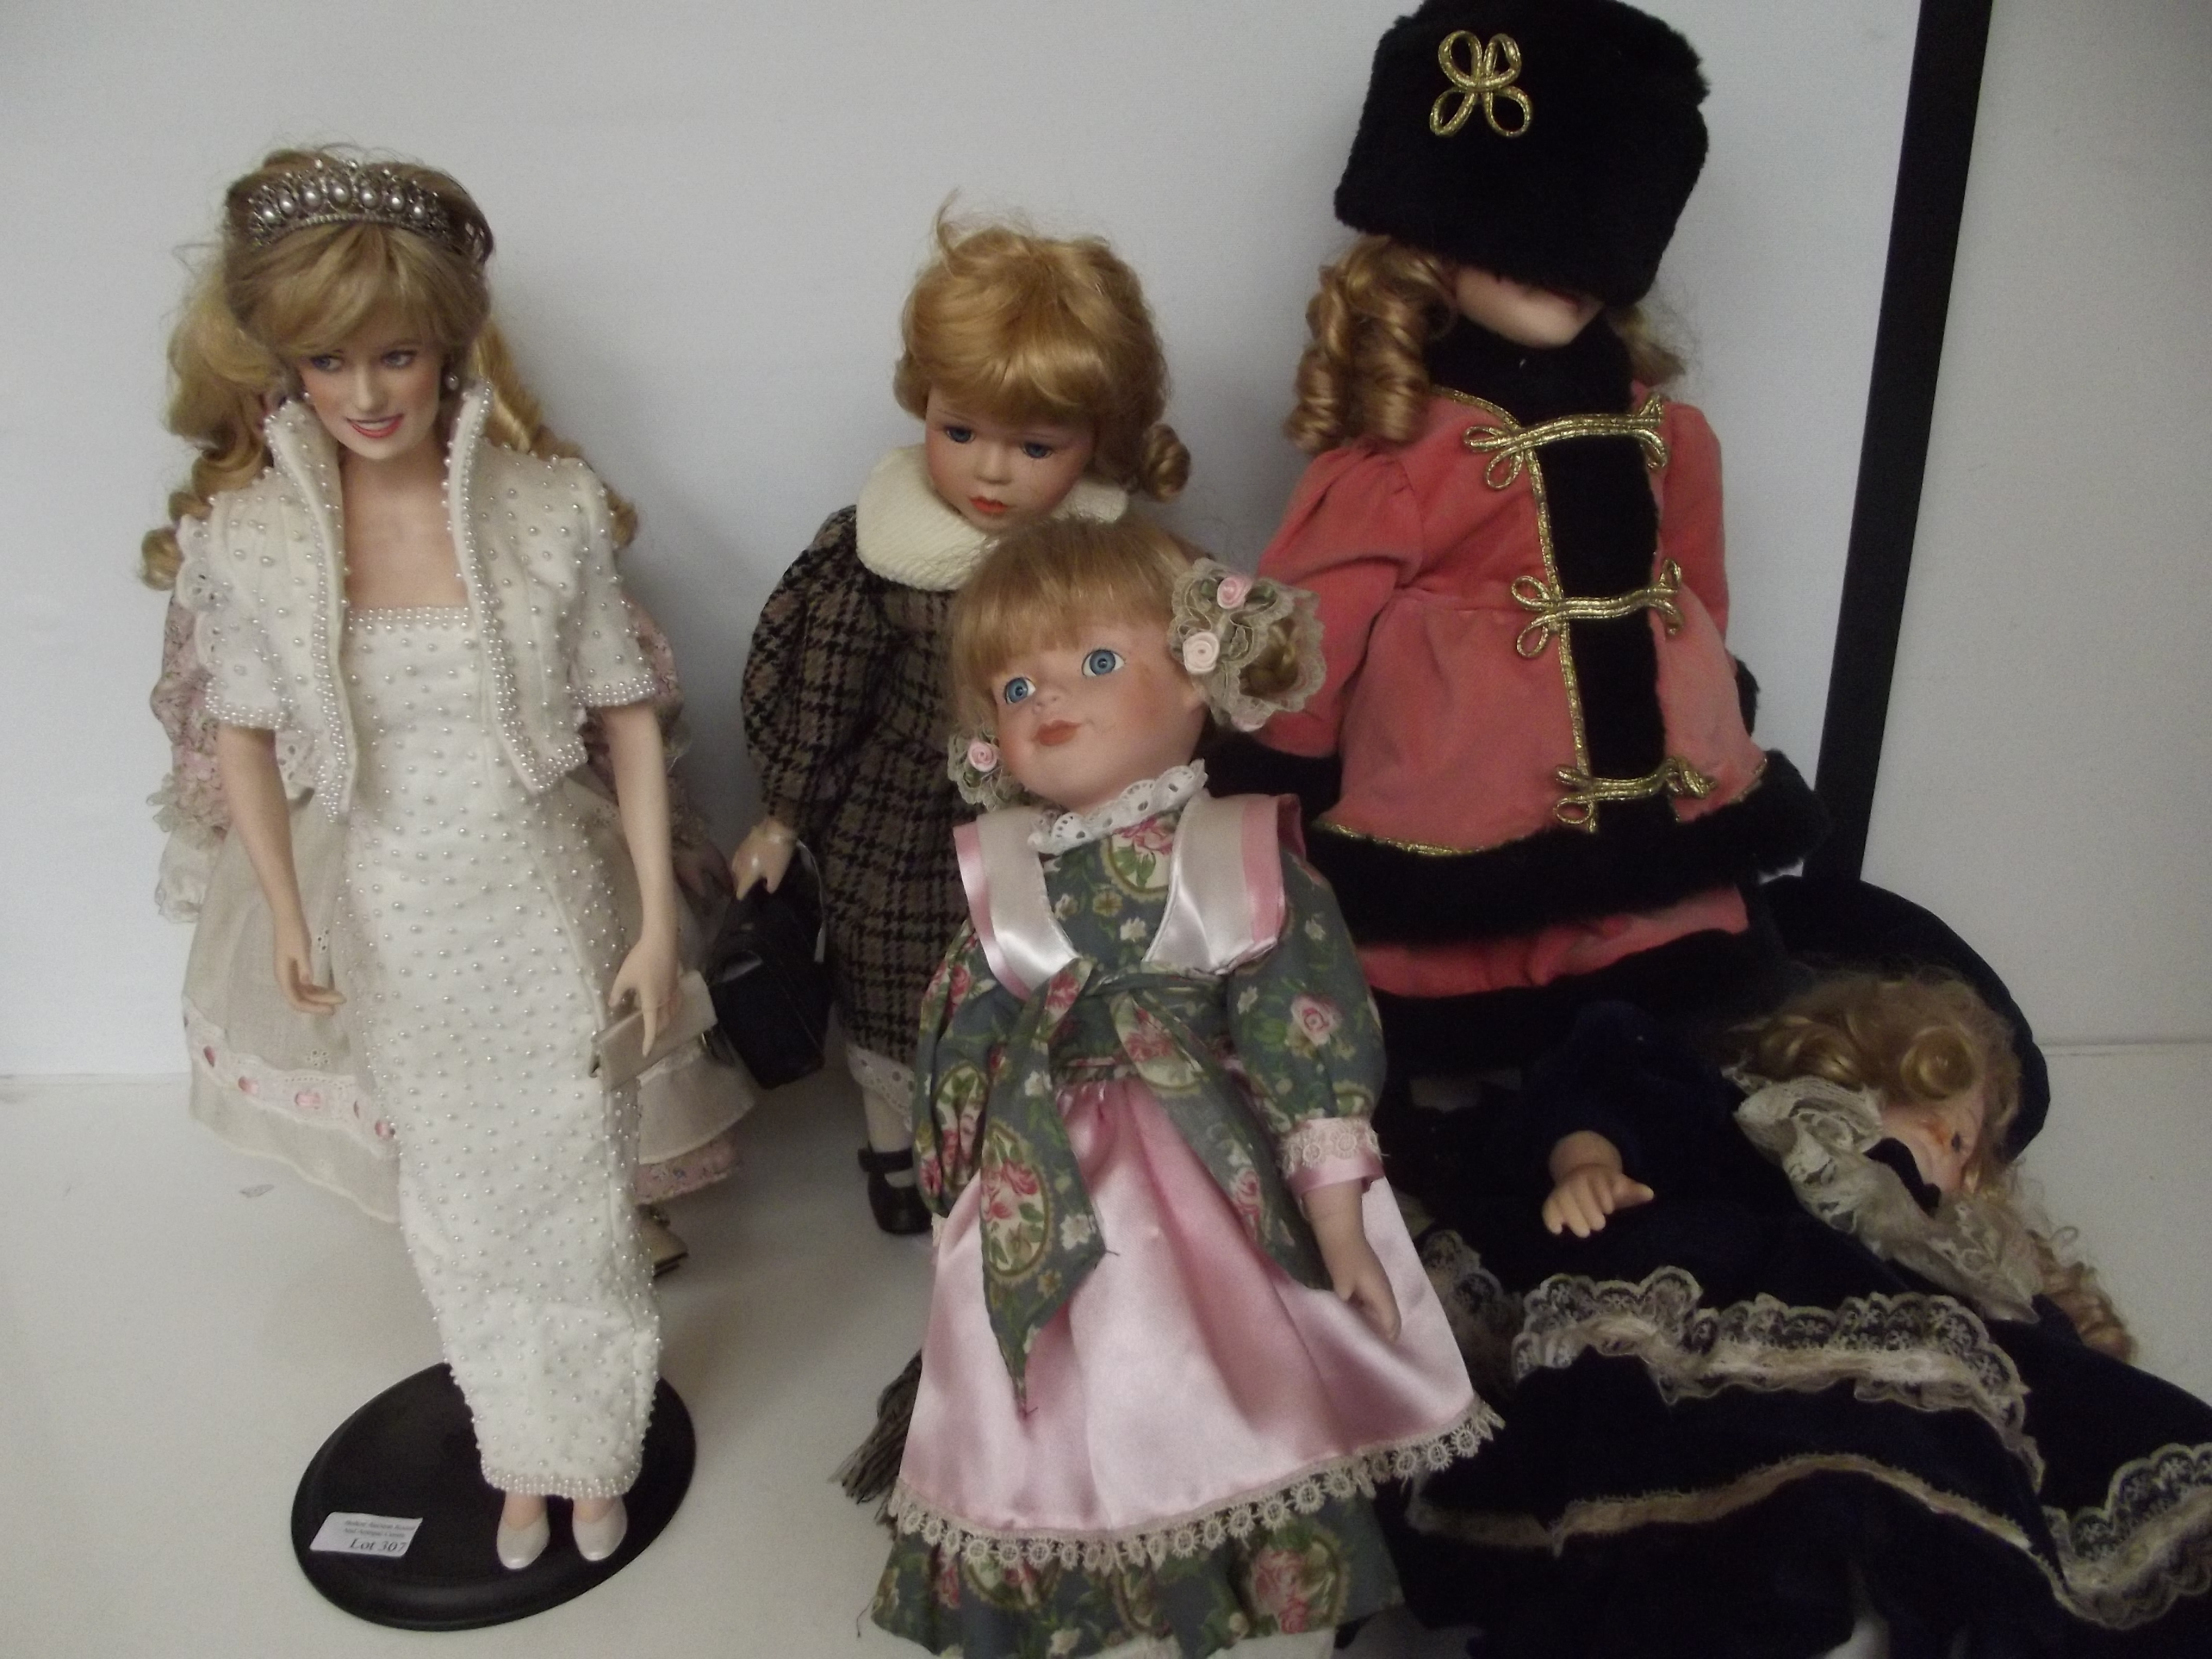 6 Bisque headed dolls